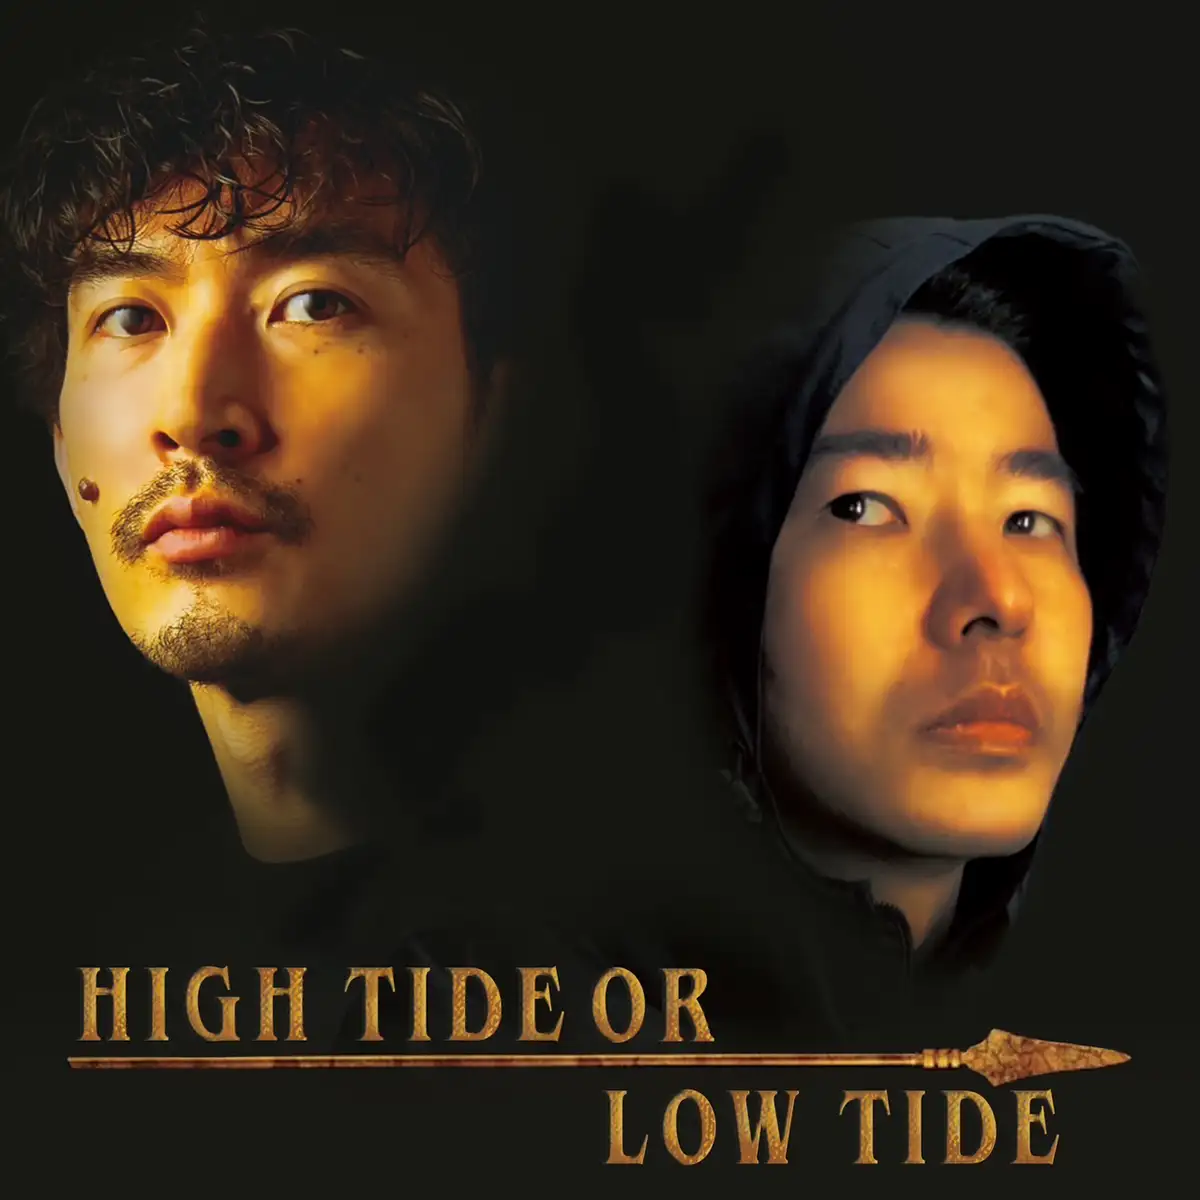 「High tide or low tide」Hibikillaアートワーク